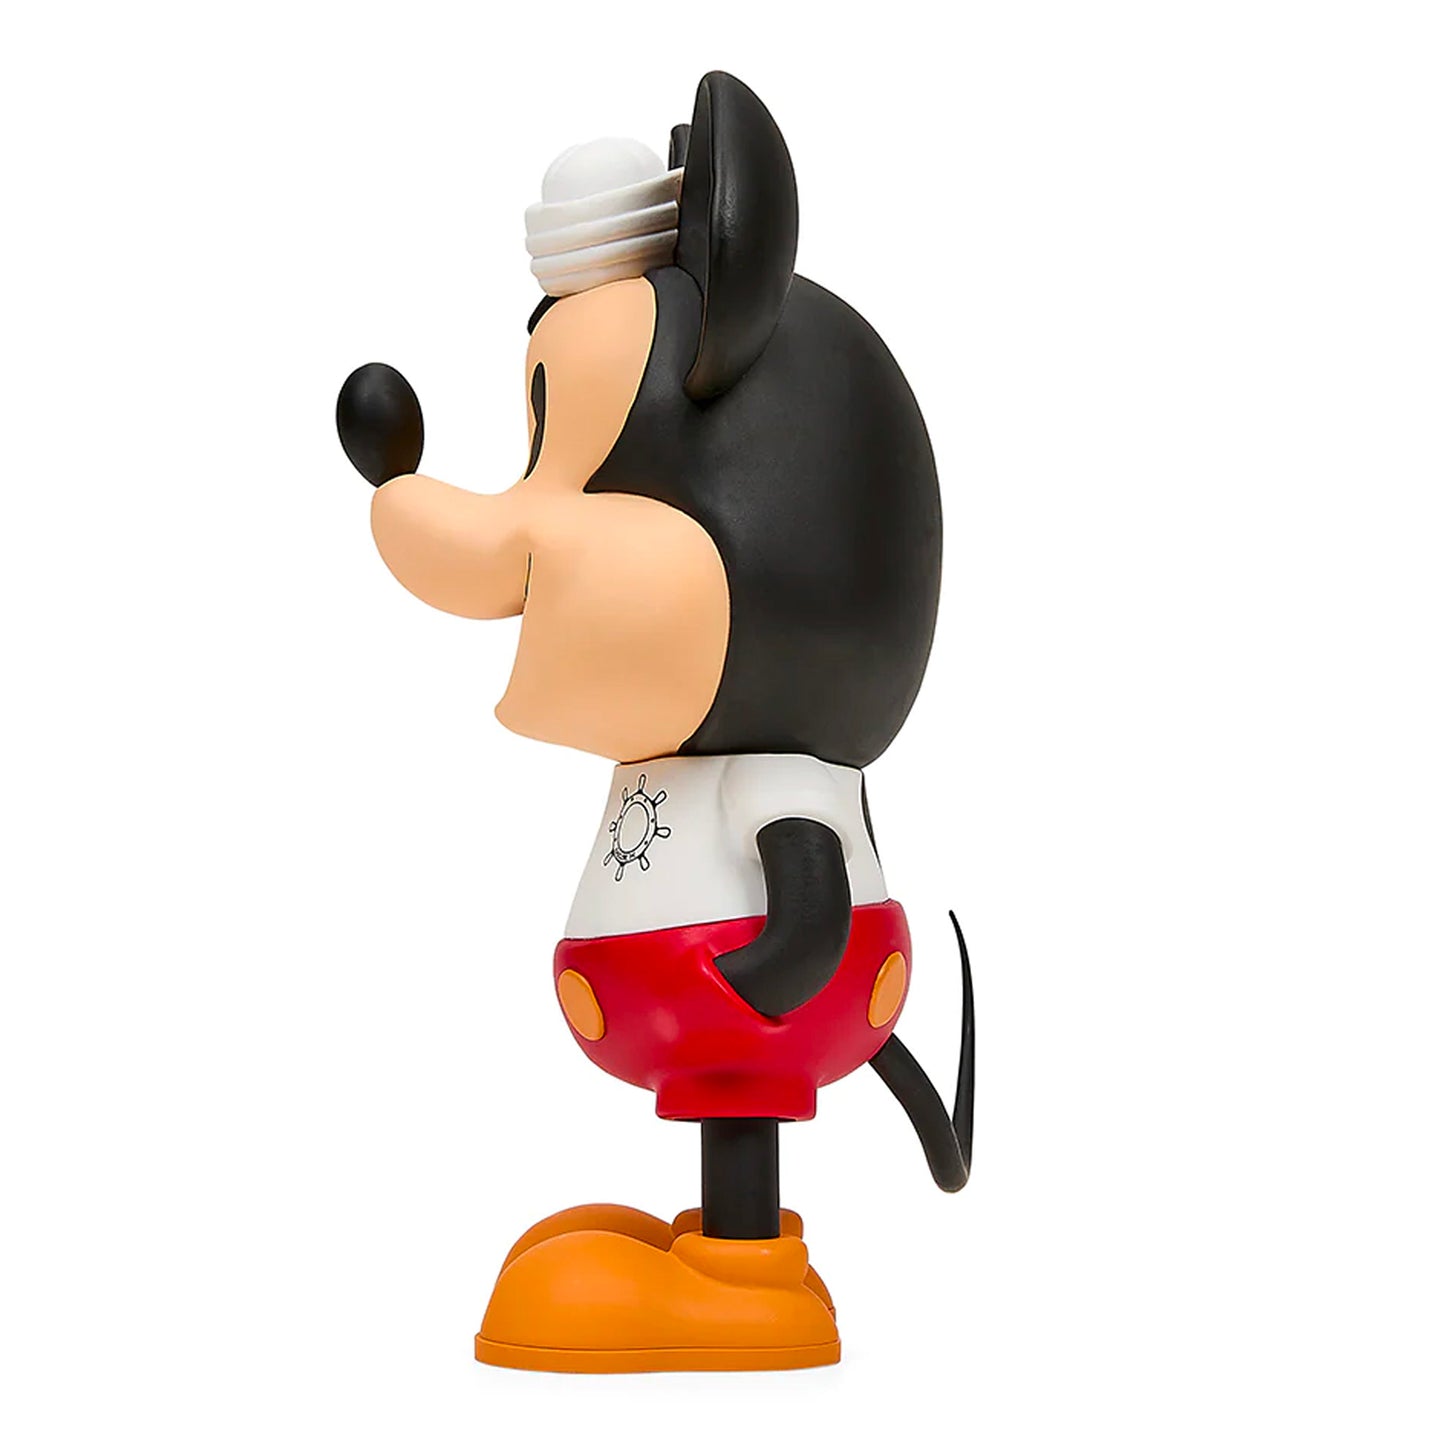 Kidrobot x PASA - Mickey Mouse "SAILOR M" 8" Tall Vinyl Figure